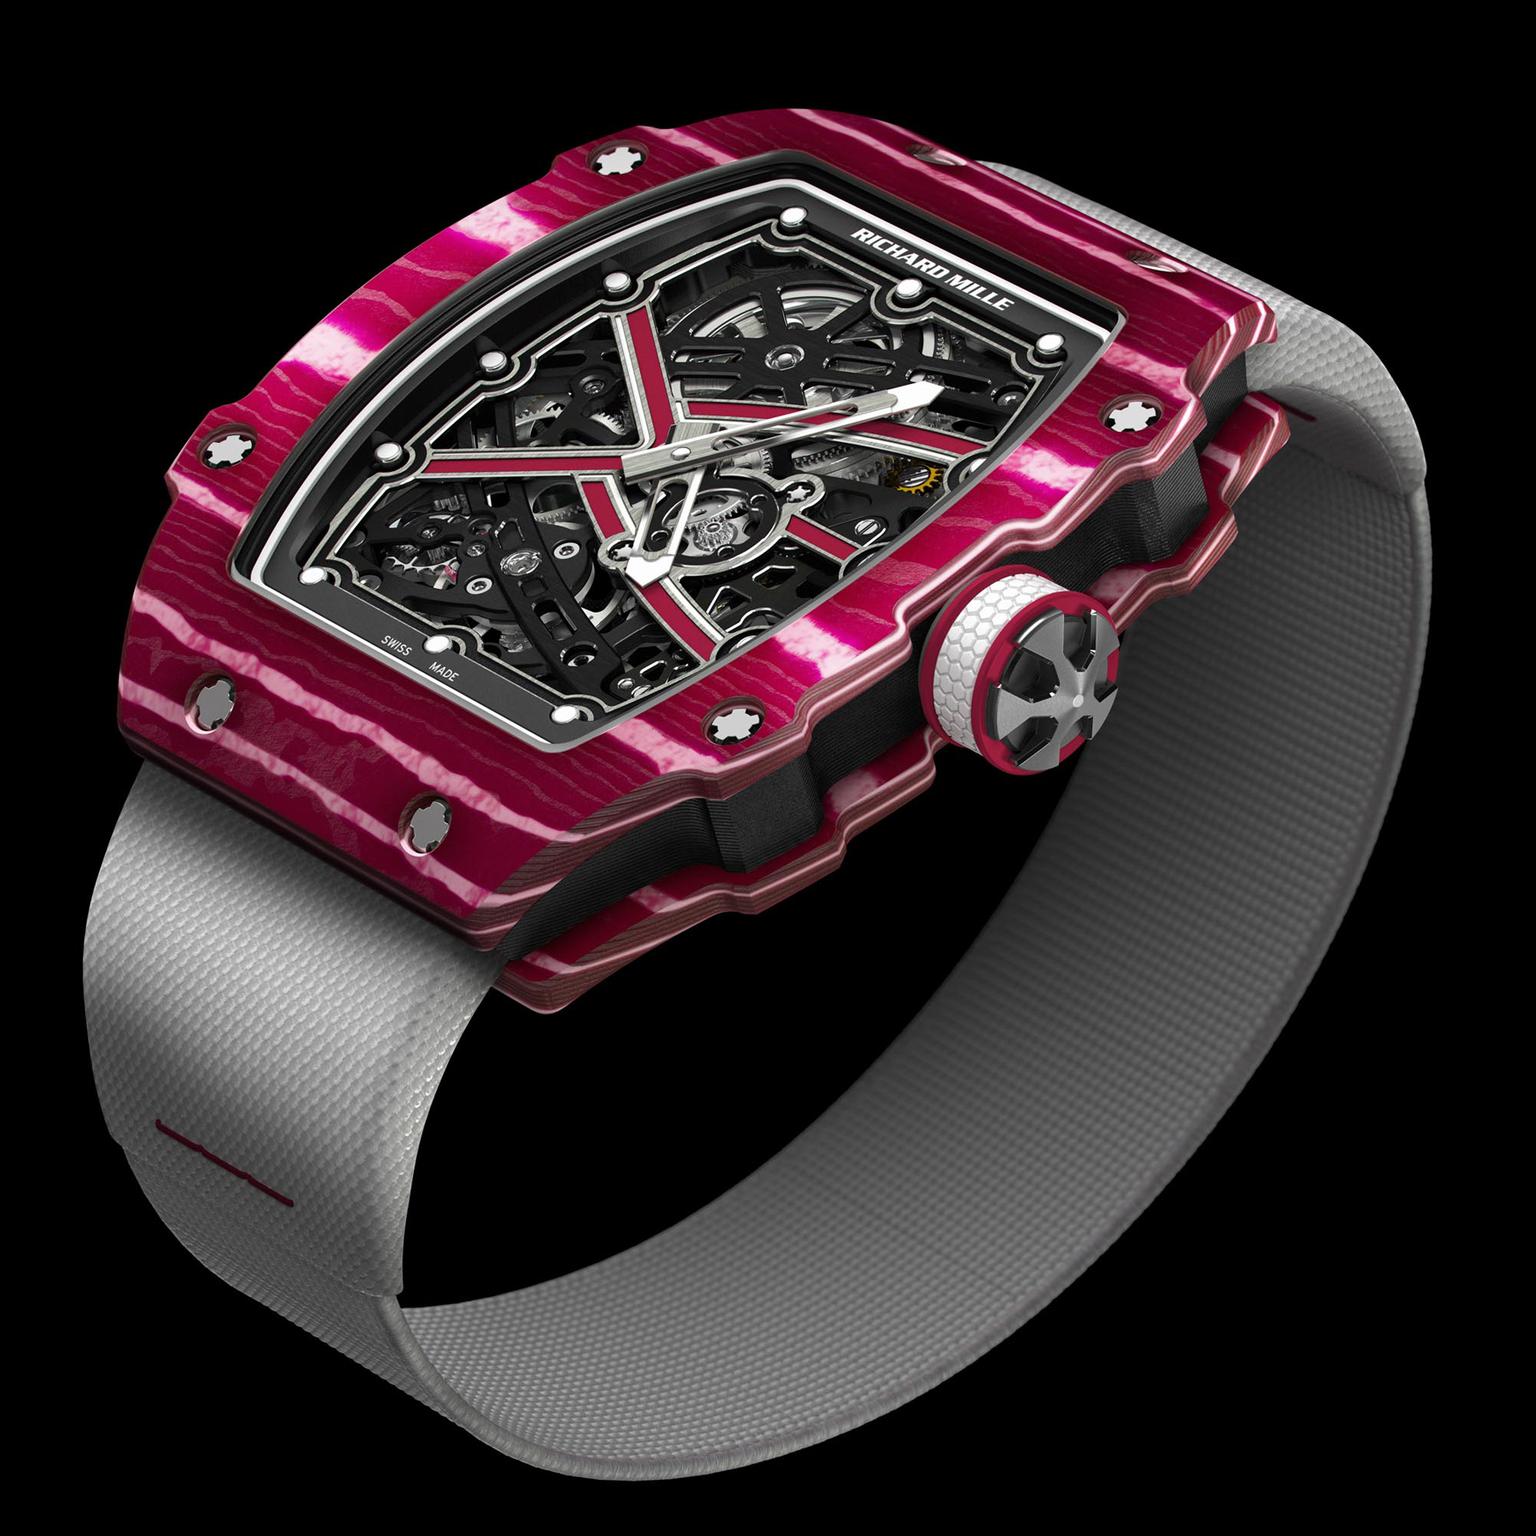 Richard Mille RM 67-02 watch